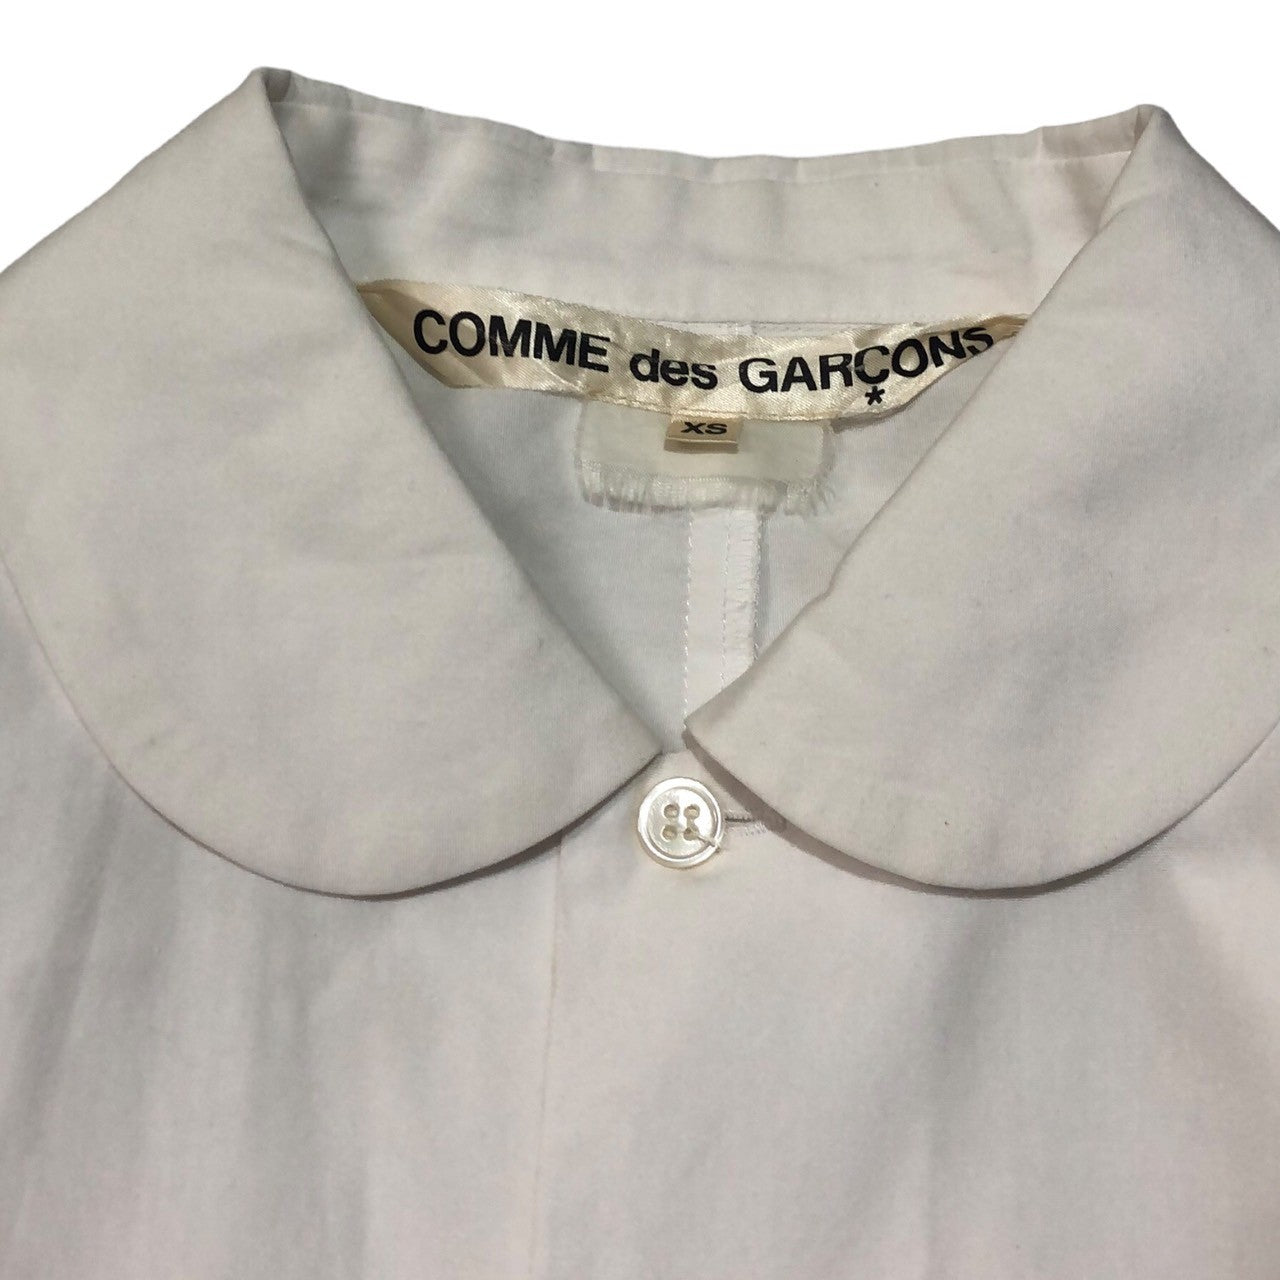 COMME des GARCONS(コムデギャルソン) 15AW Round collar short length long sleeve shirt/丸襟ショート丈長袖シャツ/ブラウス GP-B020 XS ホワイト